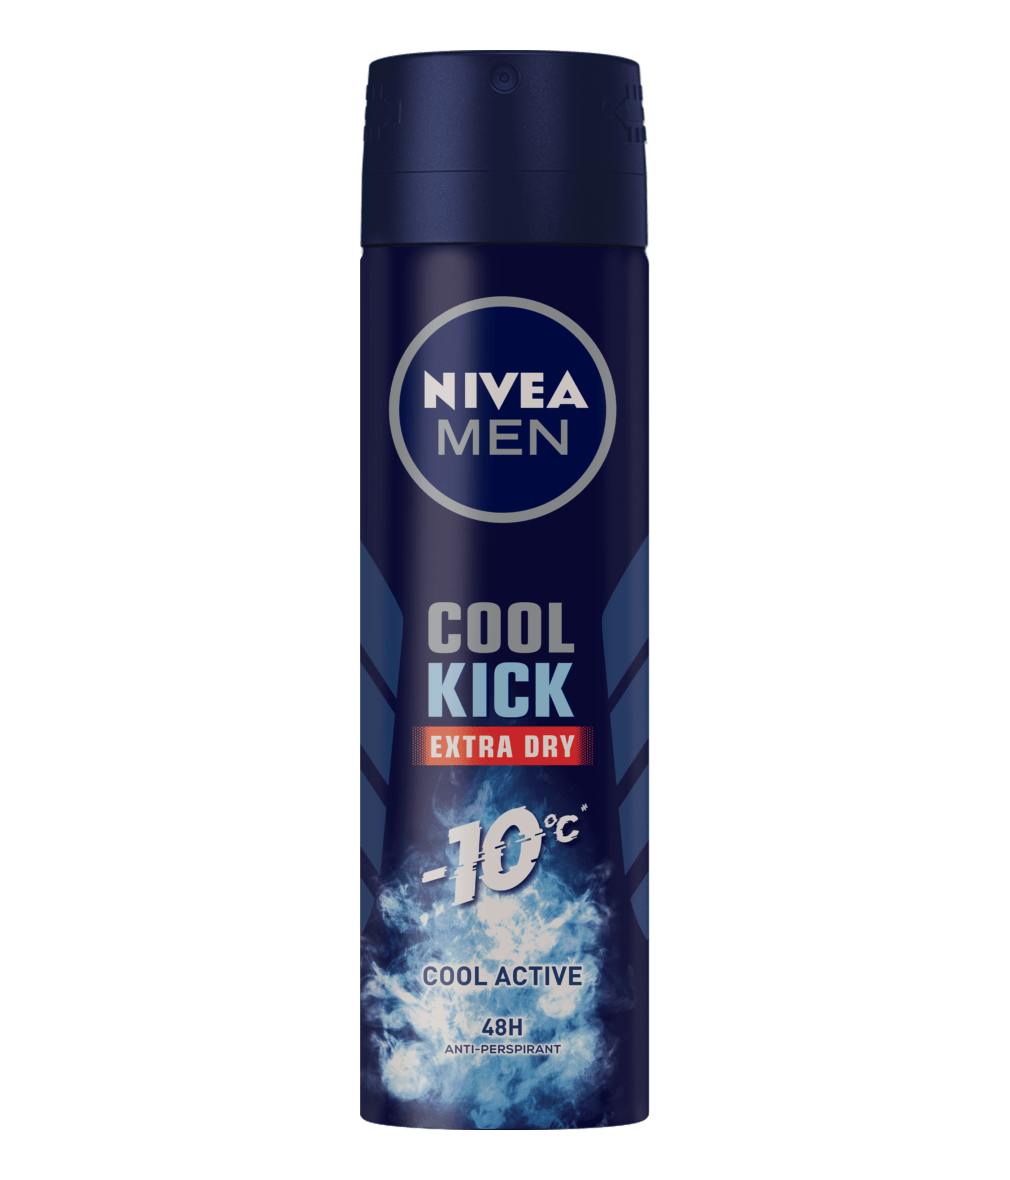 Deodorant | Longlasting Freshness | NIVEA MEN Cool Kick